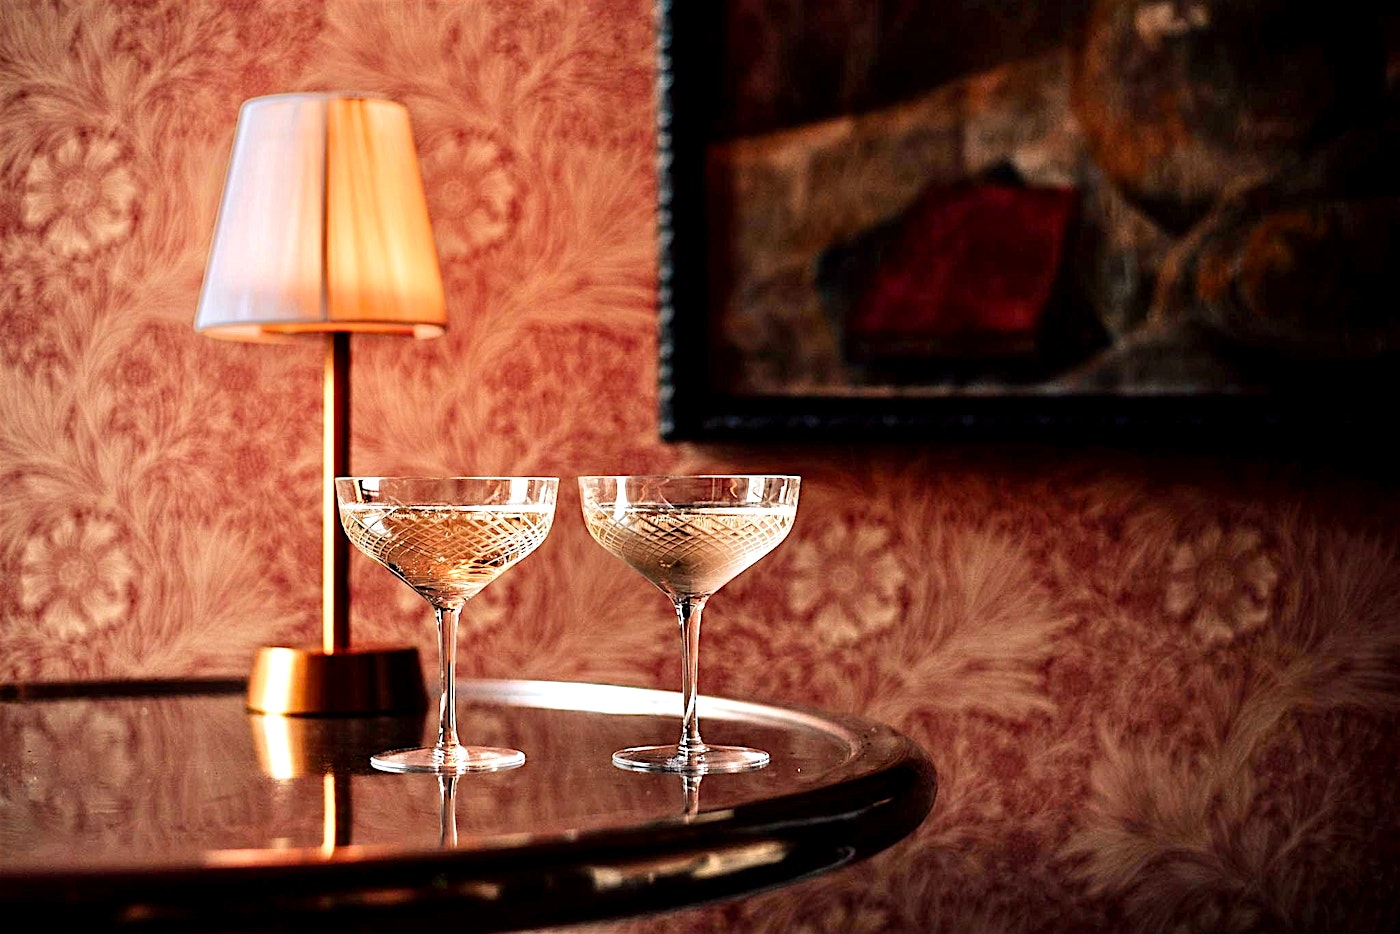 cocktails at gnh bar kings cross cocktail bar london